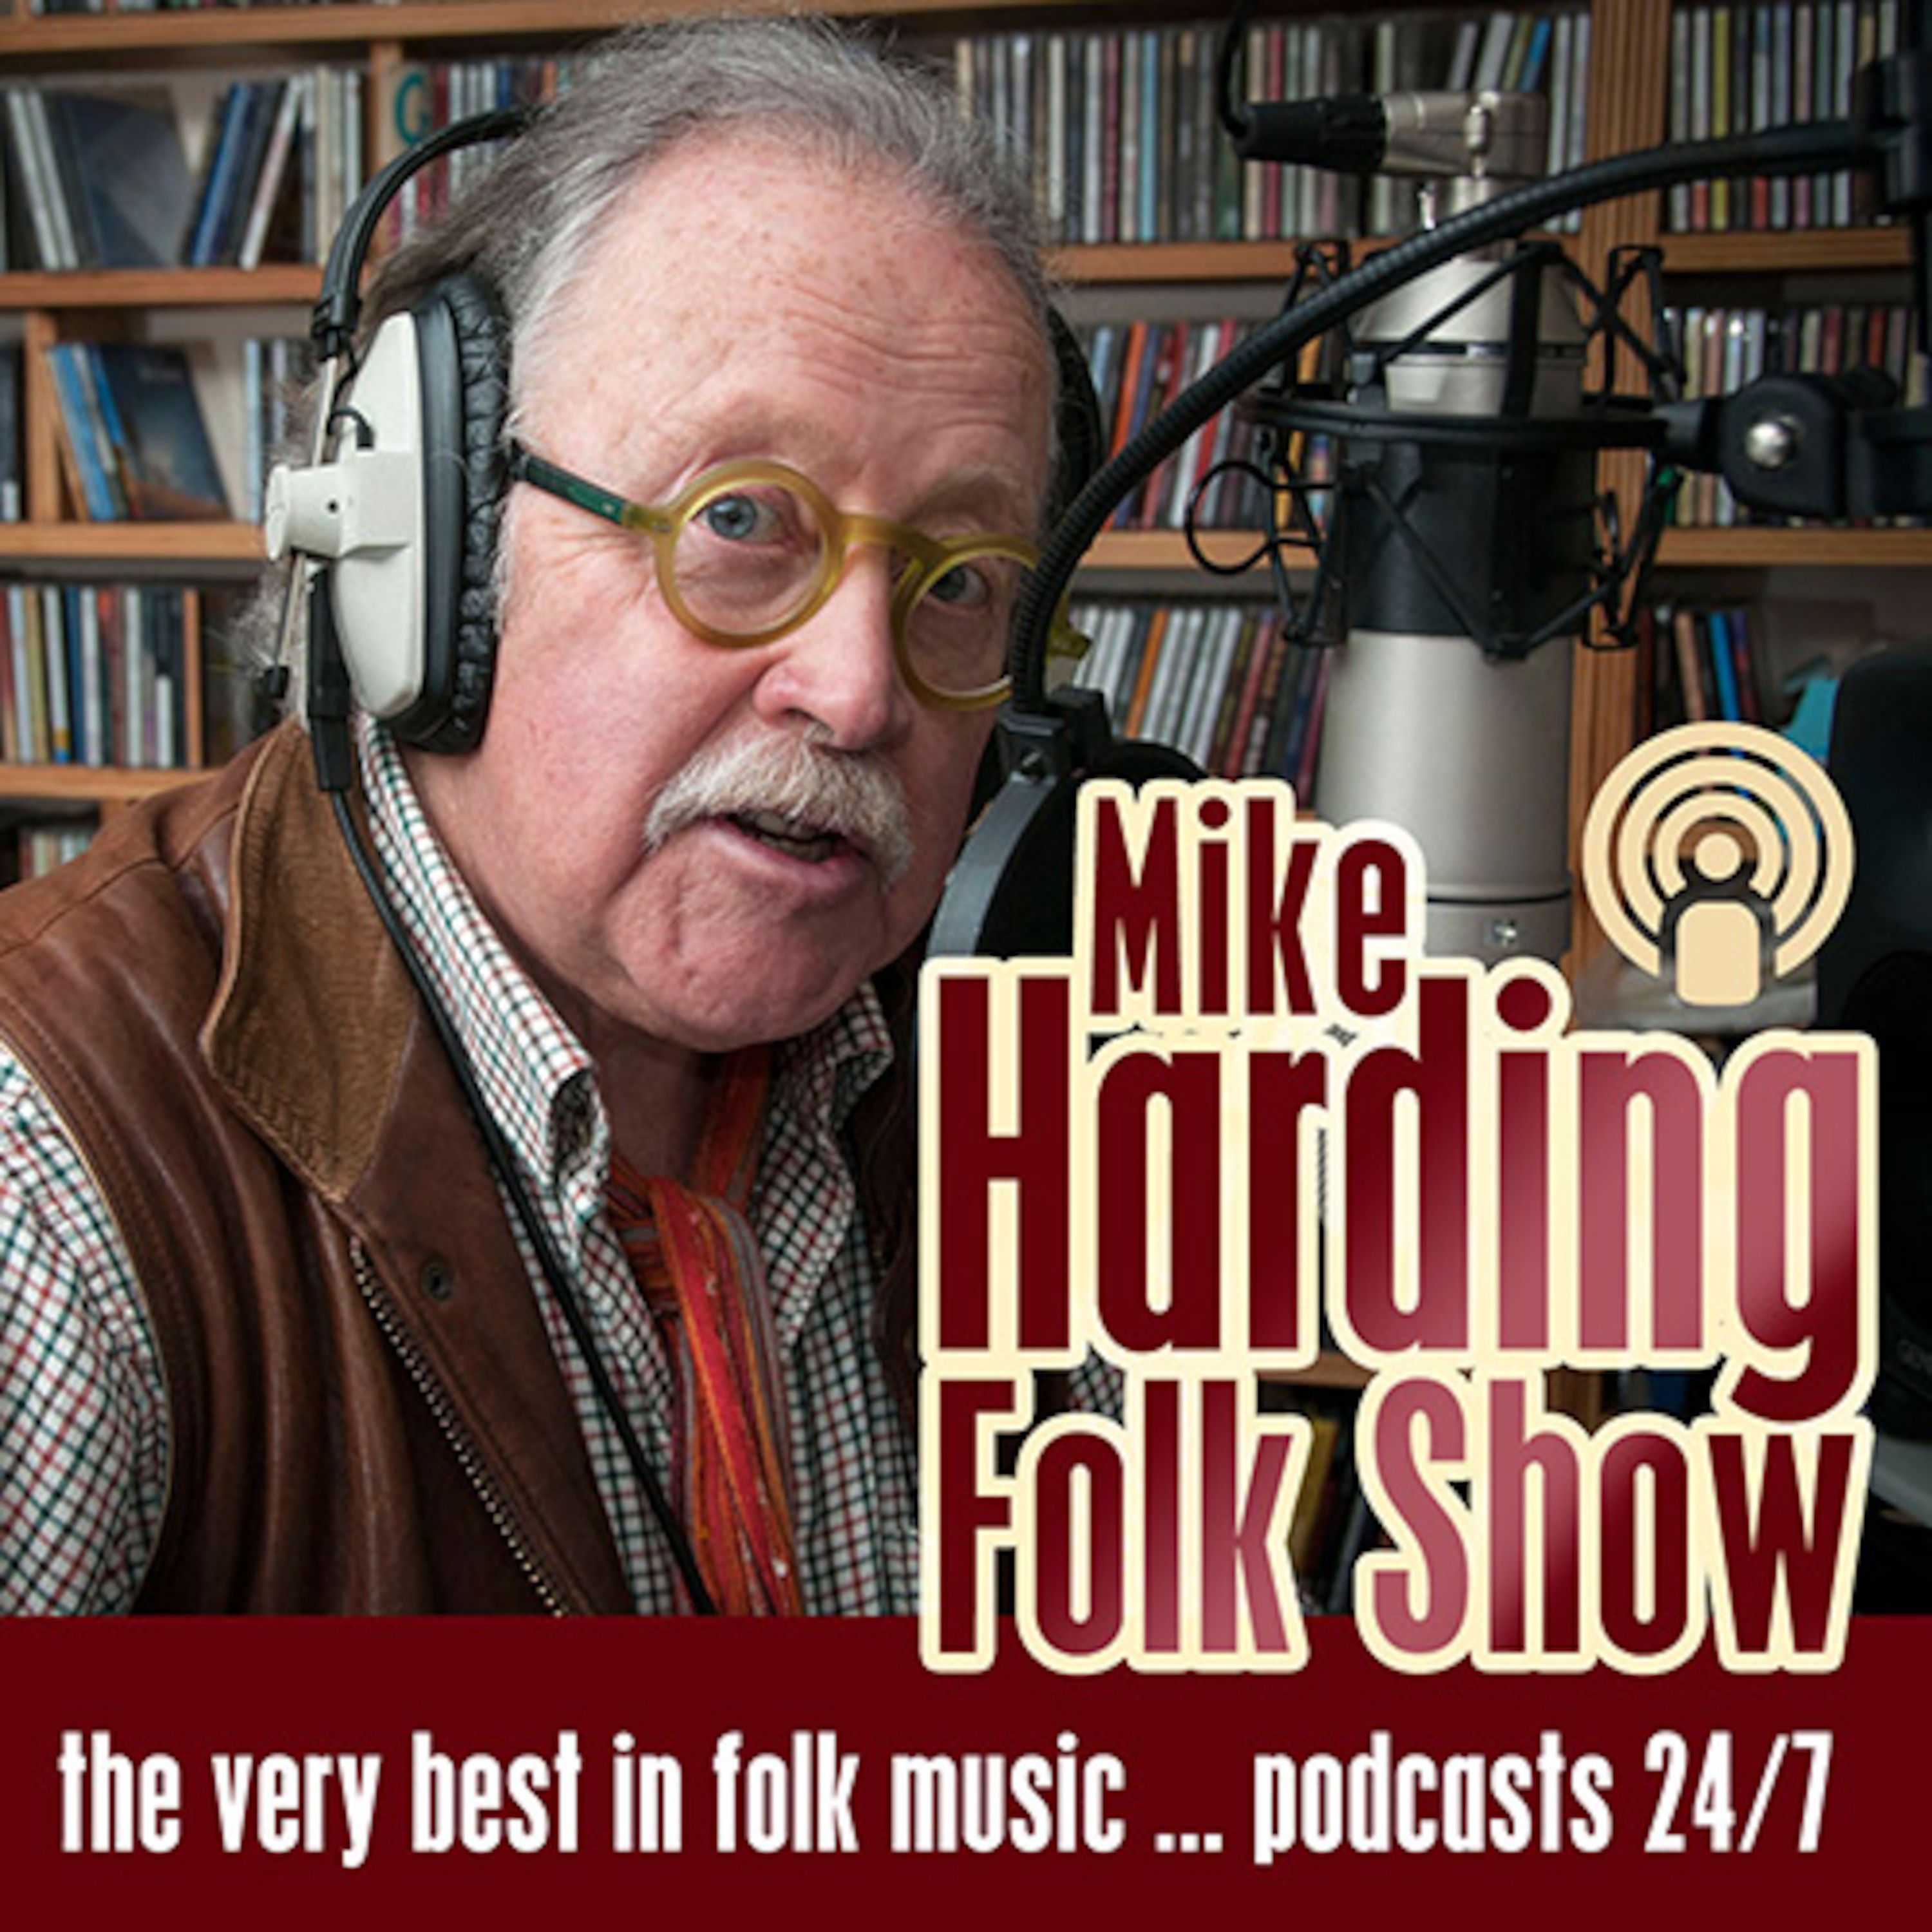 Mike Harding Folk Show 167